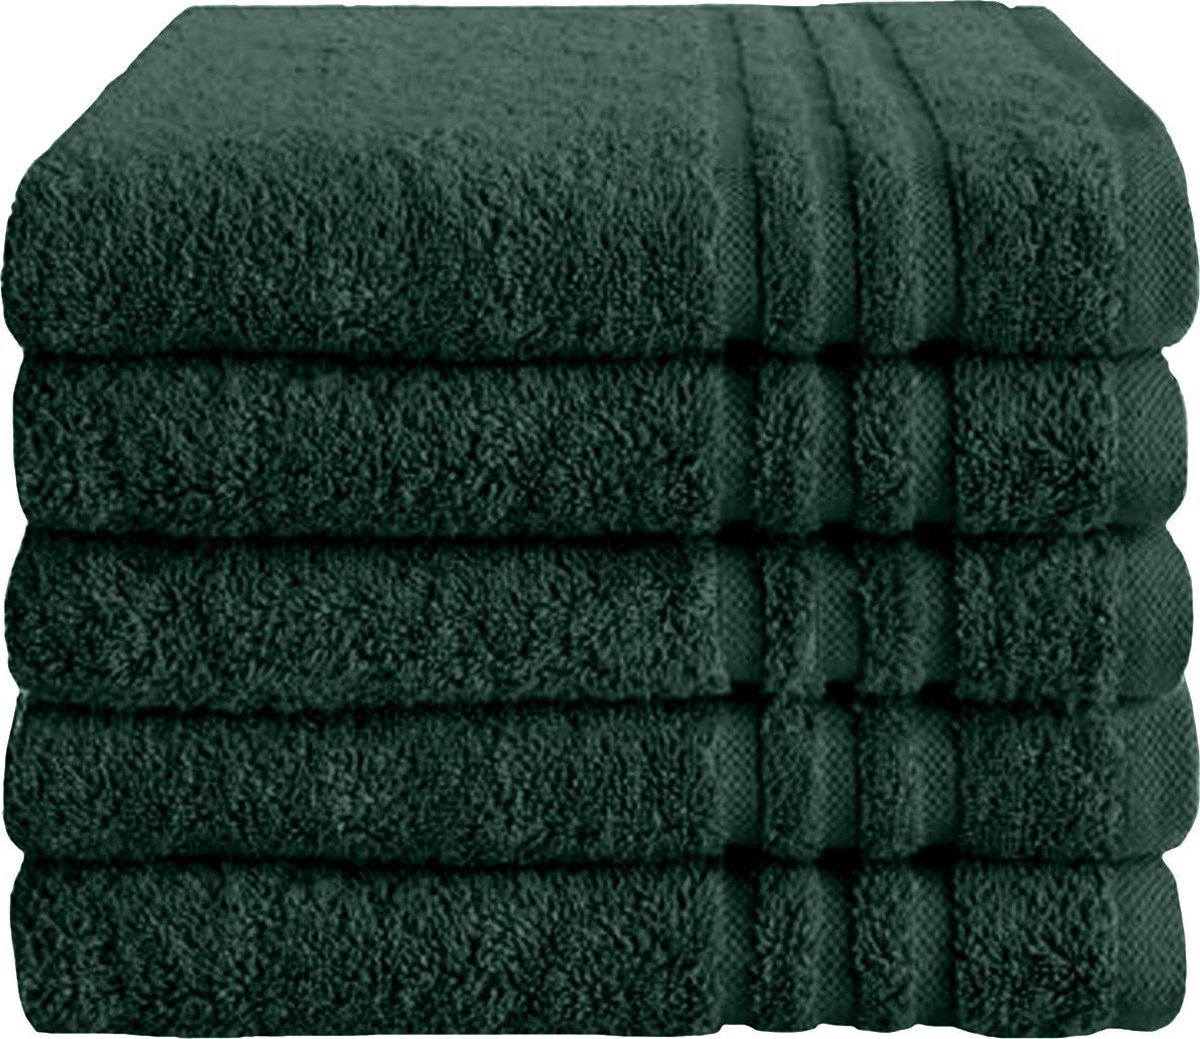 Byrklund Bath Basics Set Donker Groen - 5 handdoeken 50x100cm - BYRKLUND